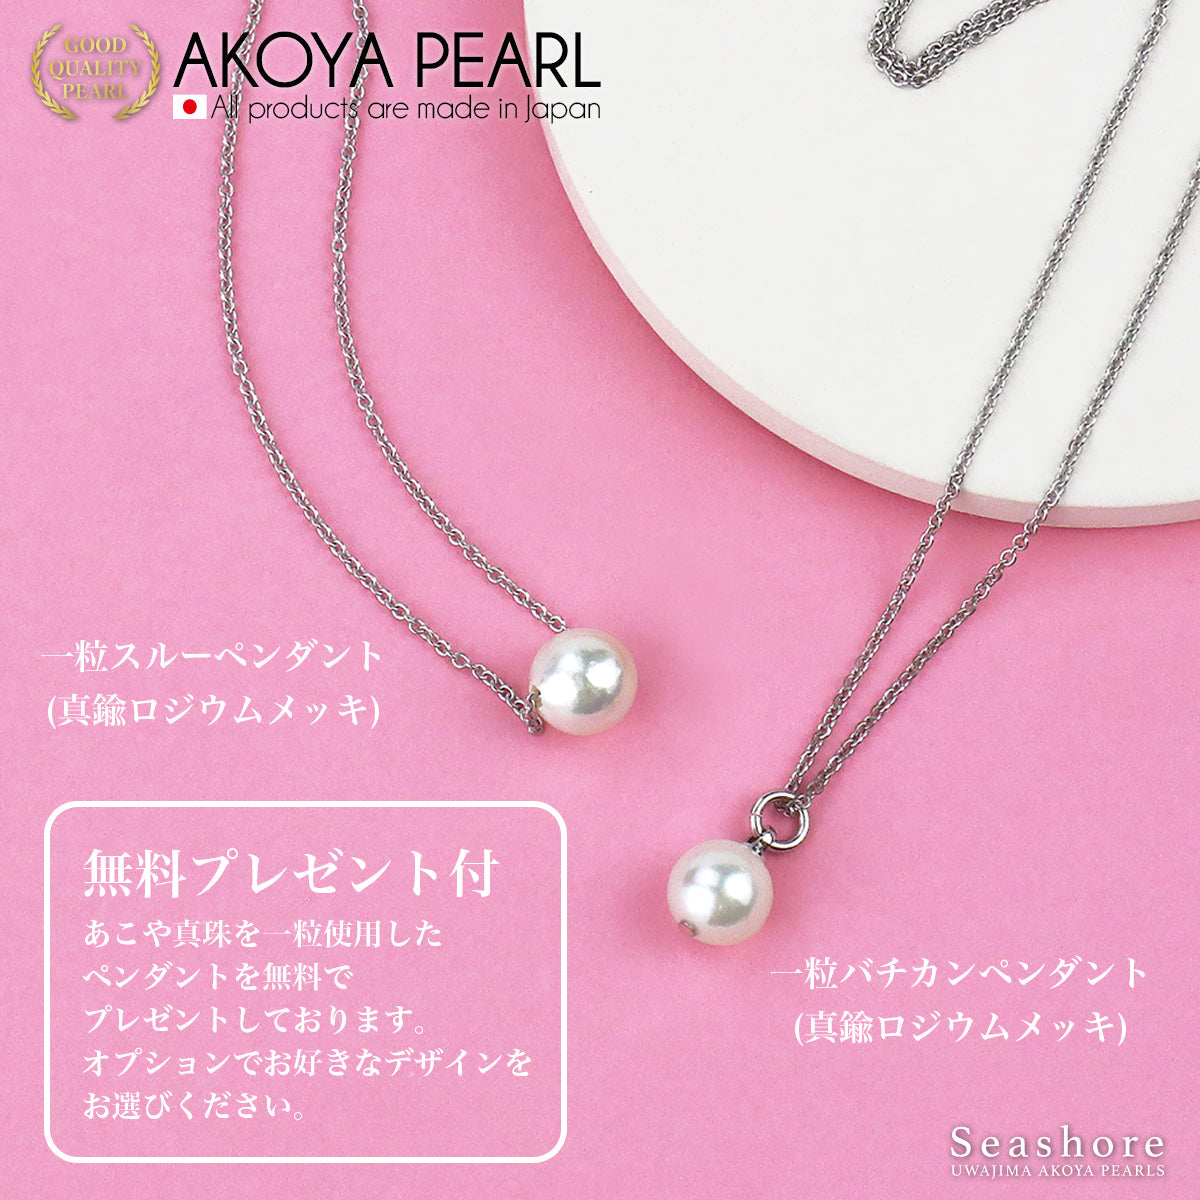 Akoya Pearl Hoop Earrings Zirconia Women's [7.5-8.0mm] SV925 Storage case included Free gift included Akoya Pearl Seashore Seashore [Free Shipping]